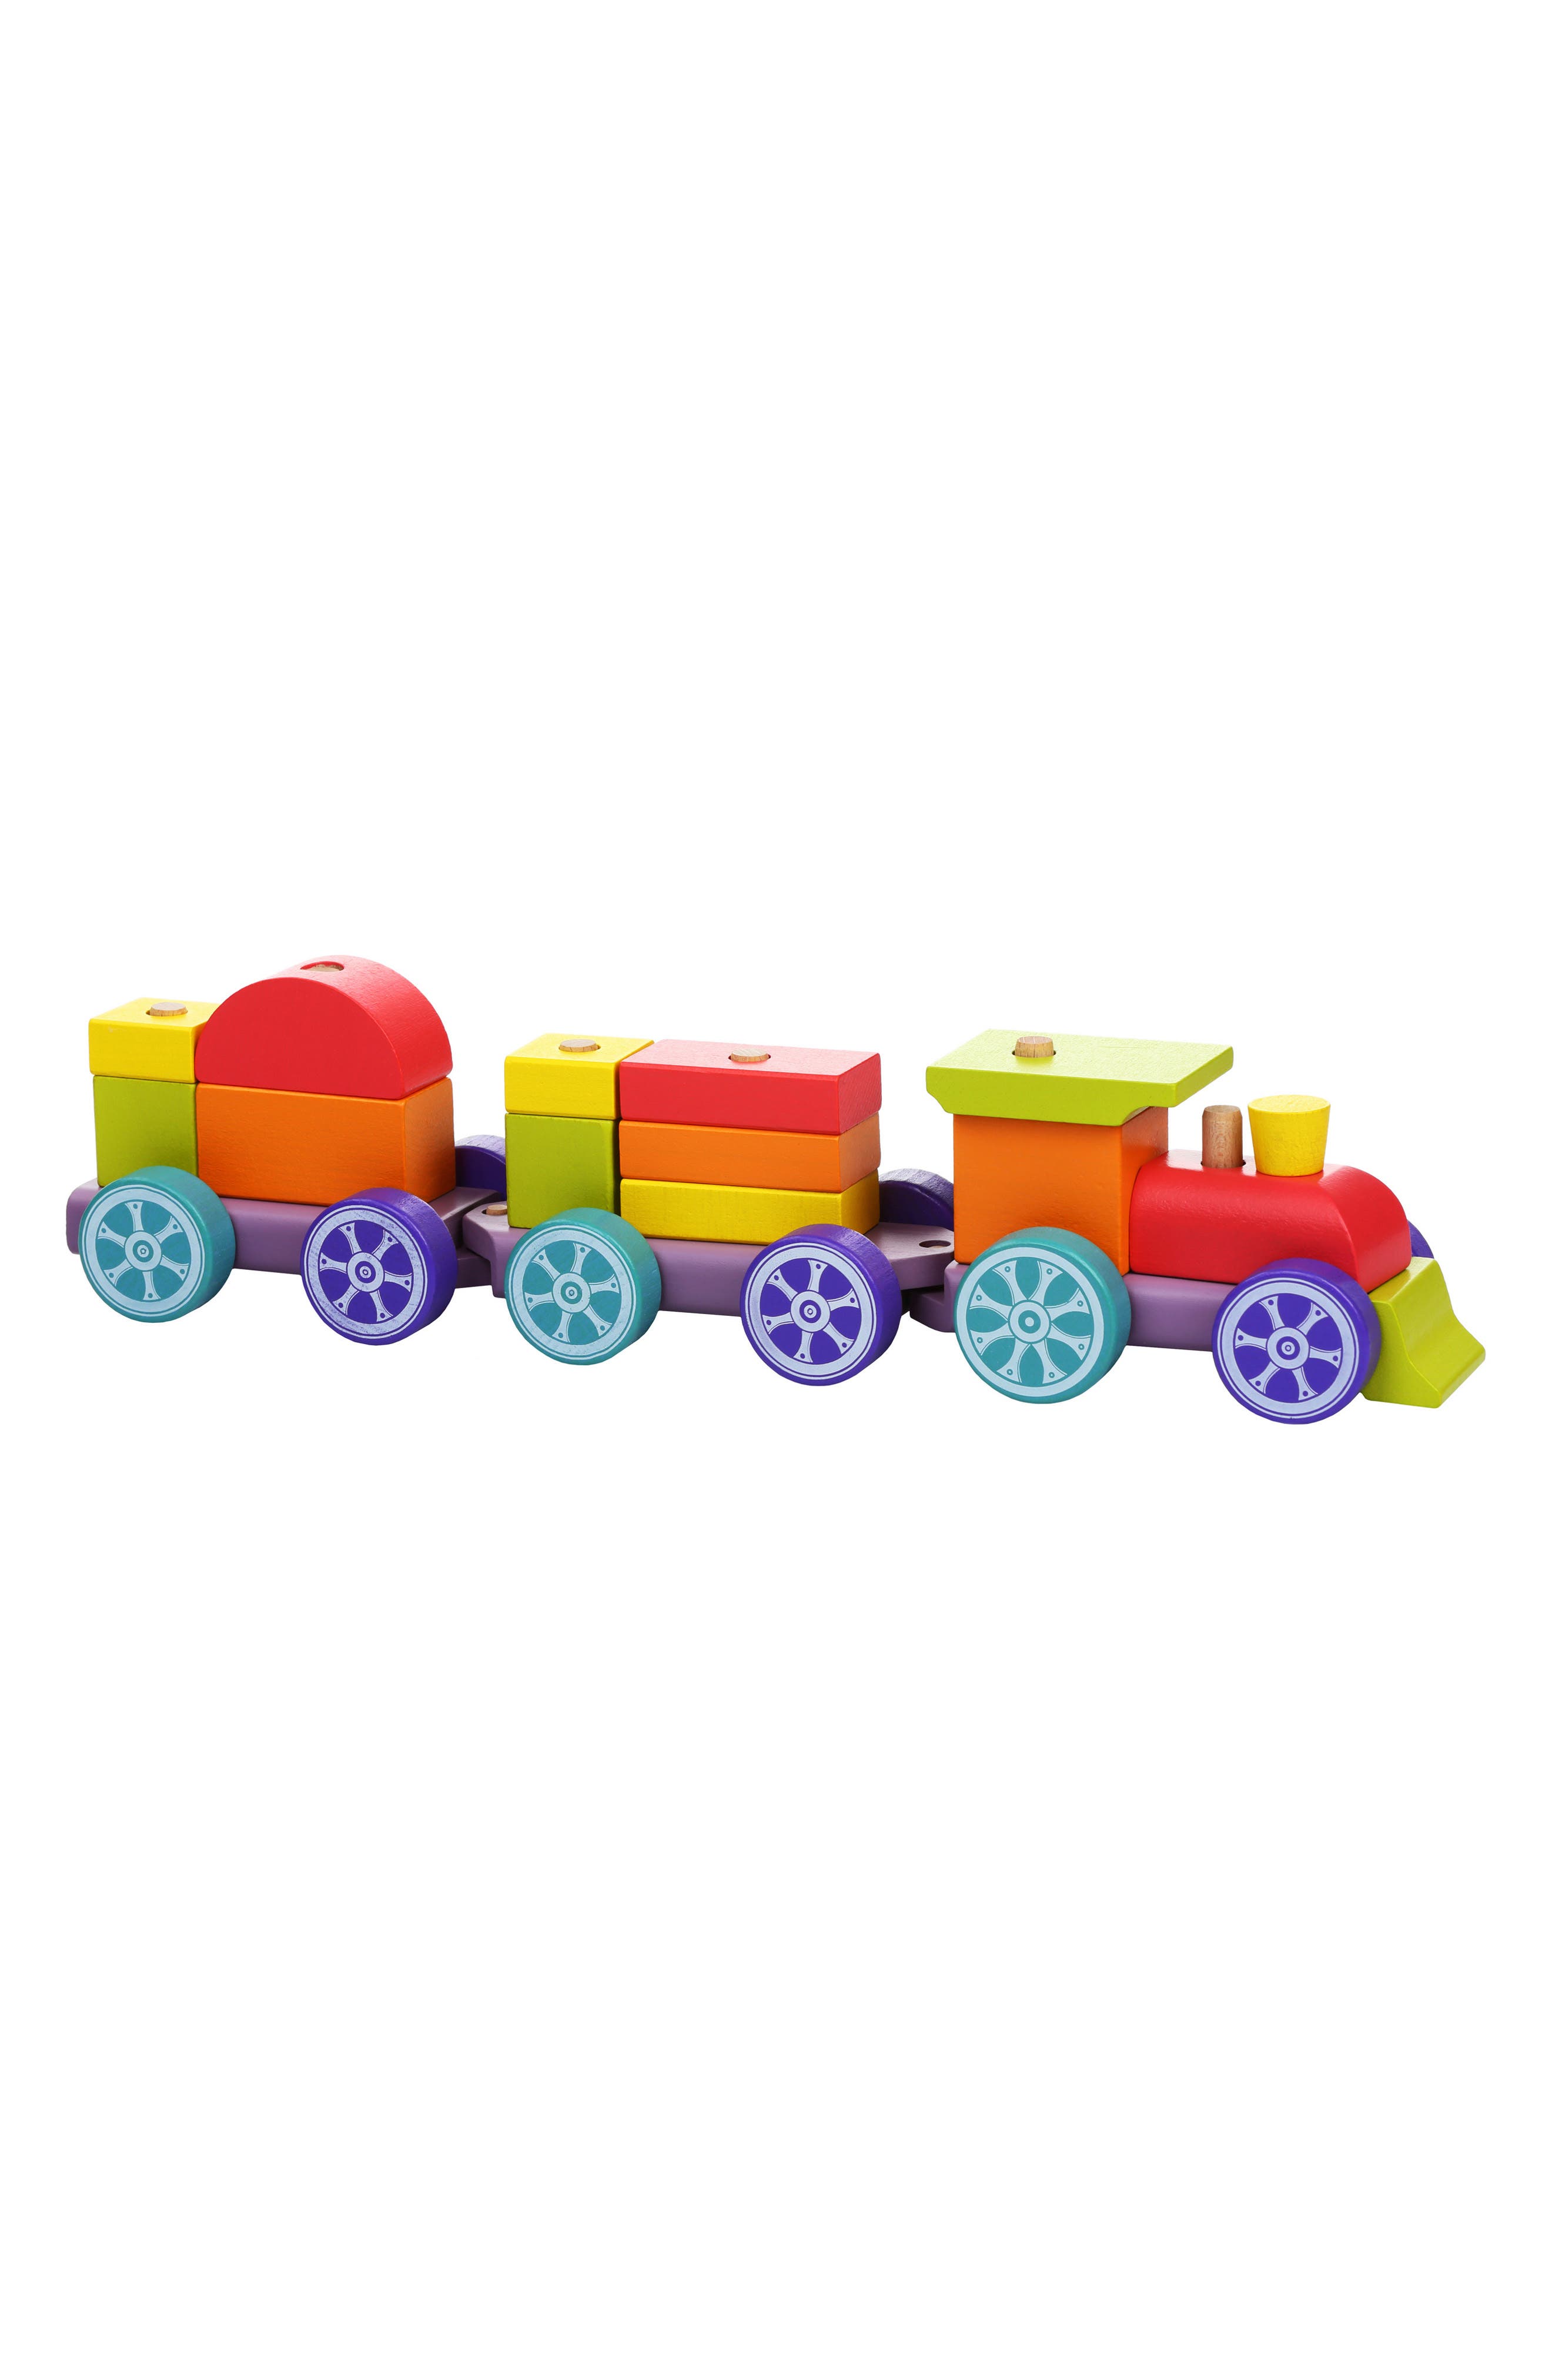 rainbow train toy